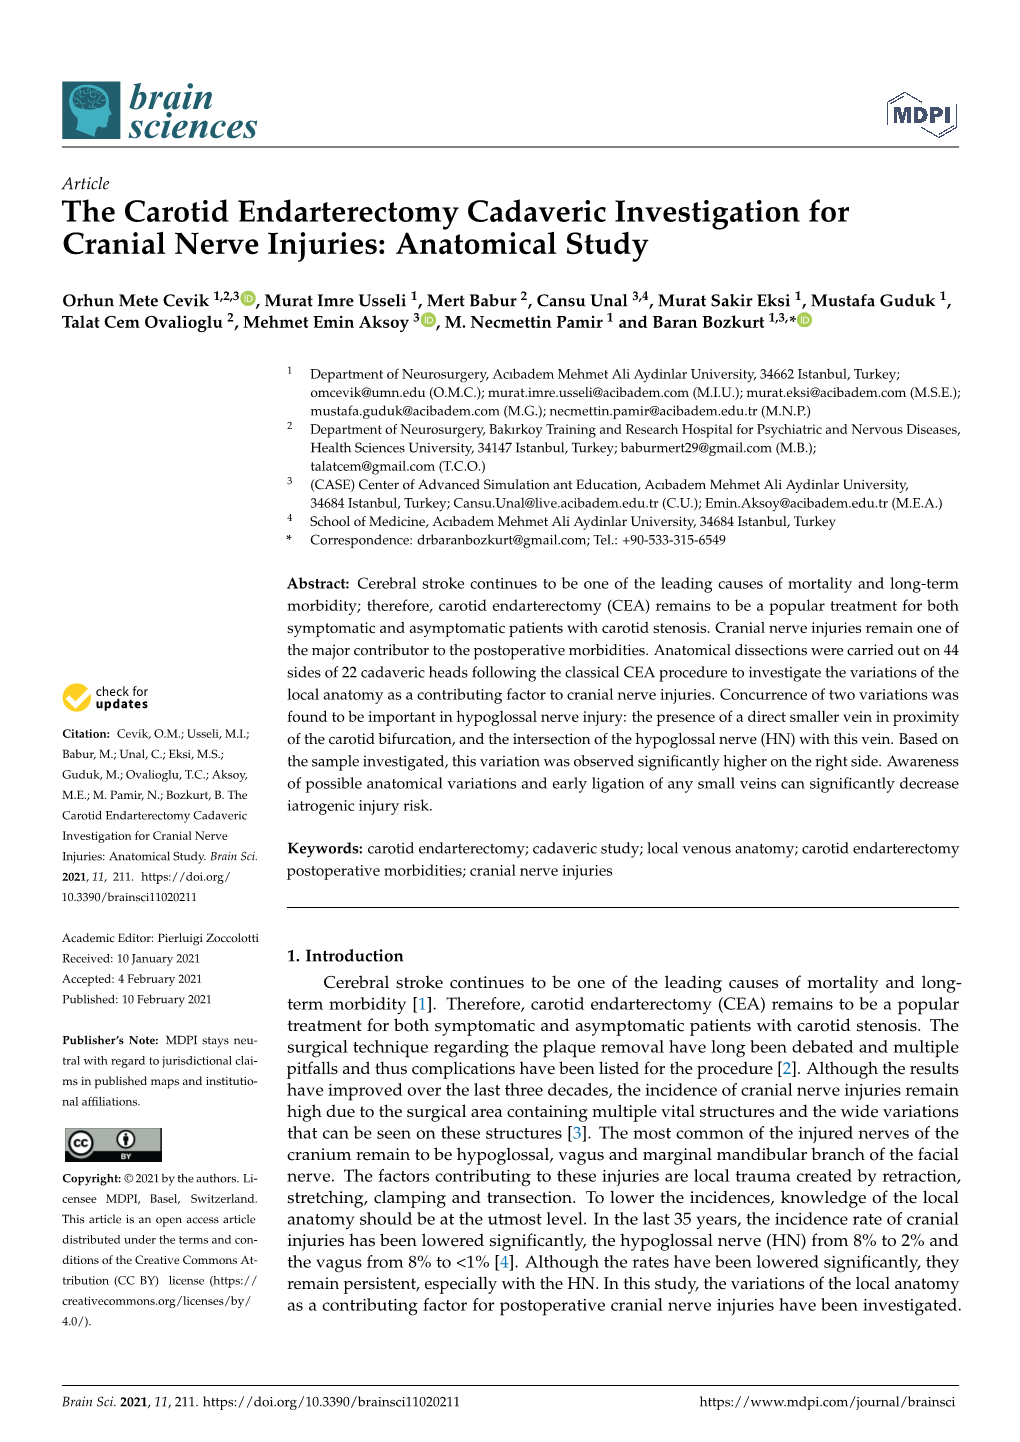 The Carotid Endarterectomy Cadaveric Investigation for Cranial Nerve Injuries: Anatomical Study